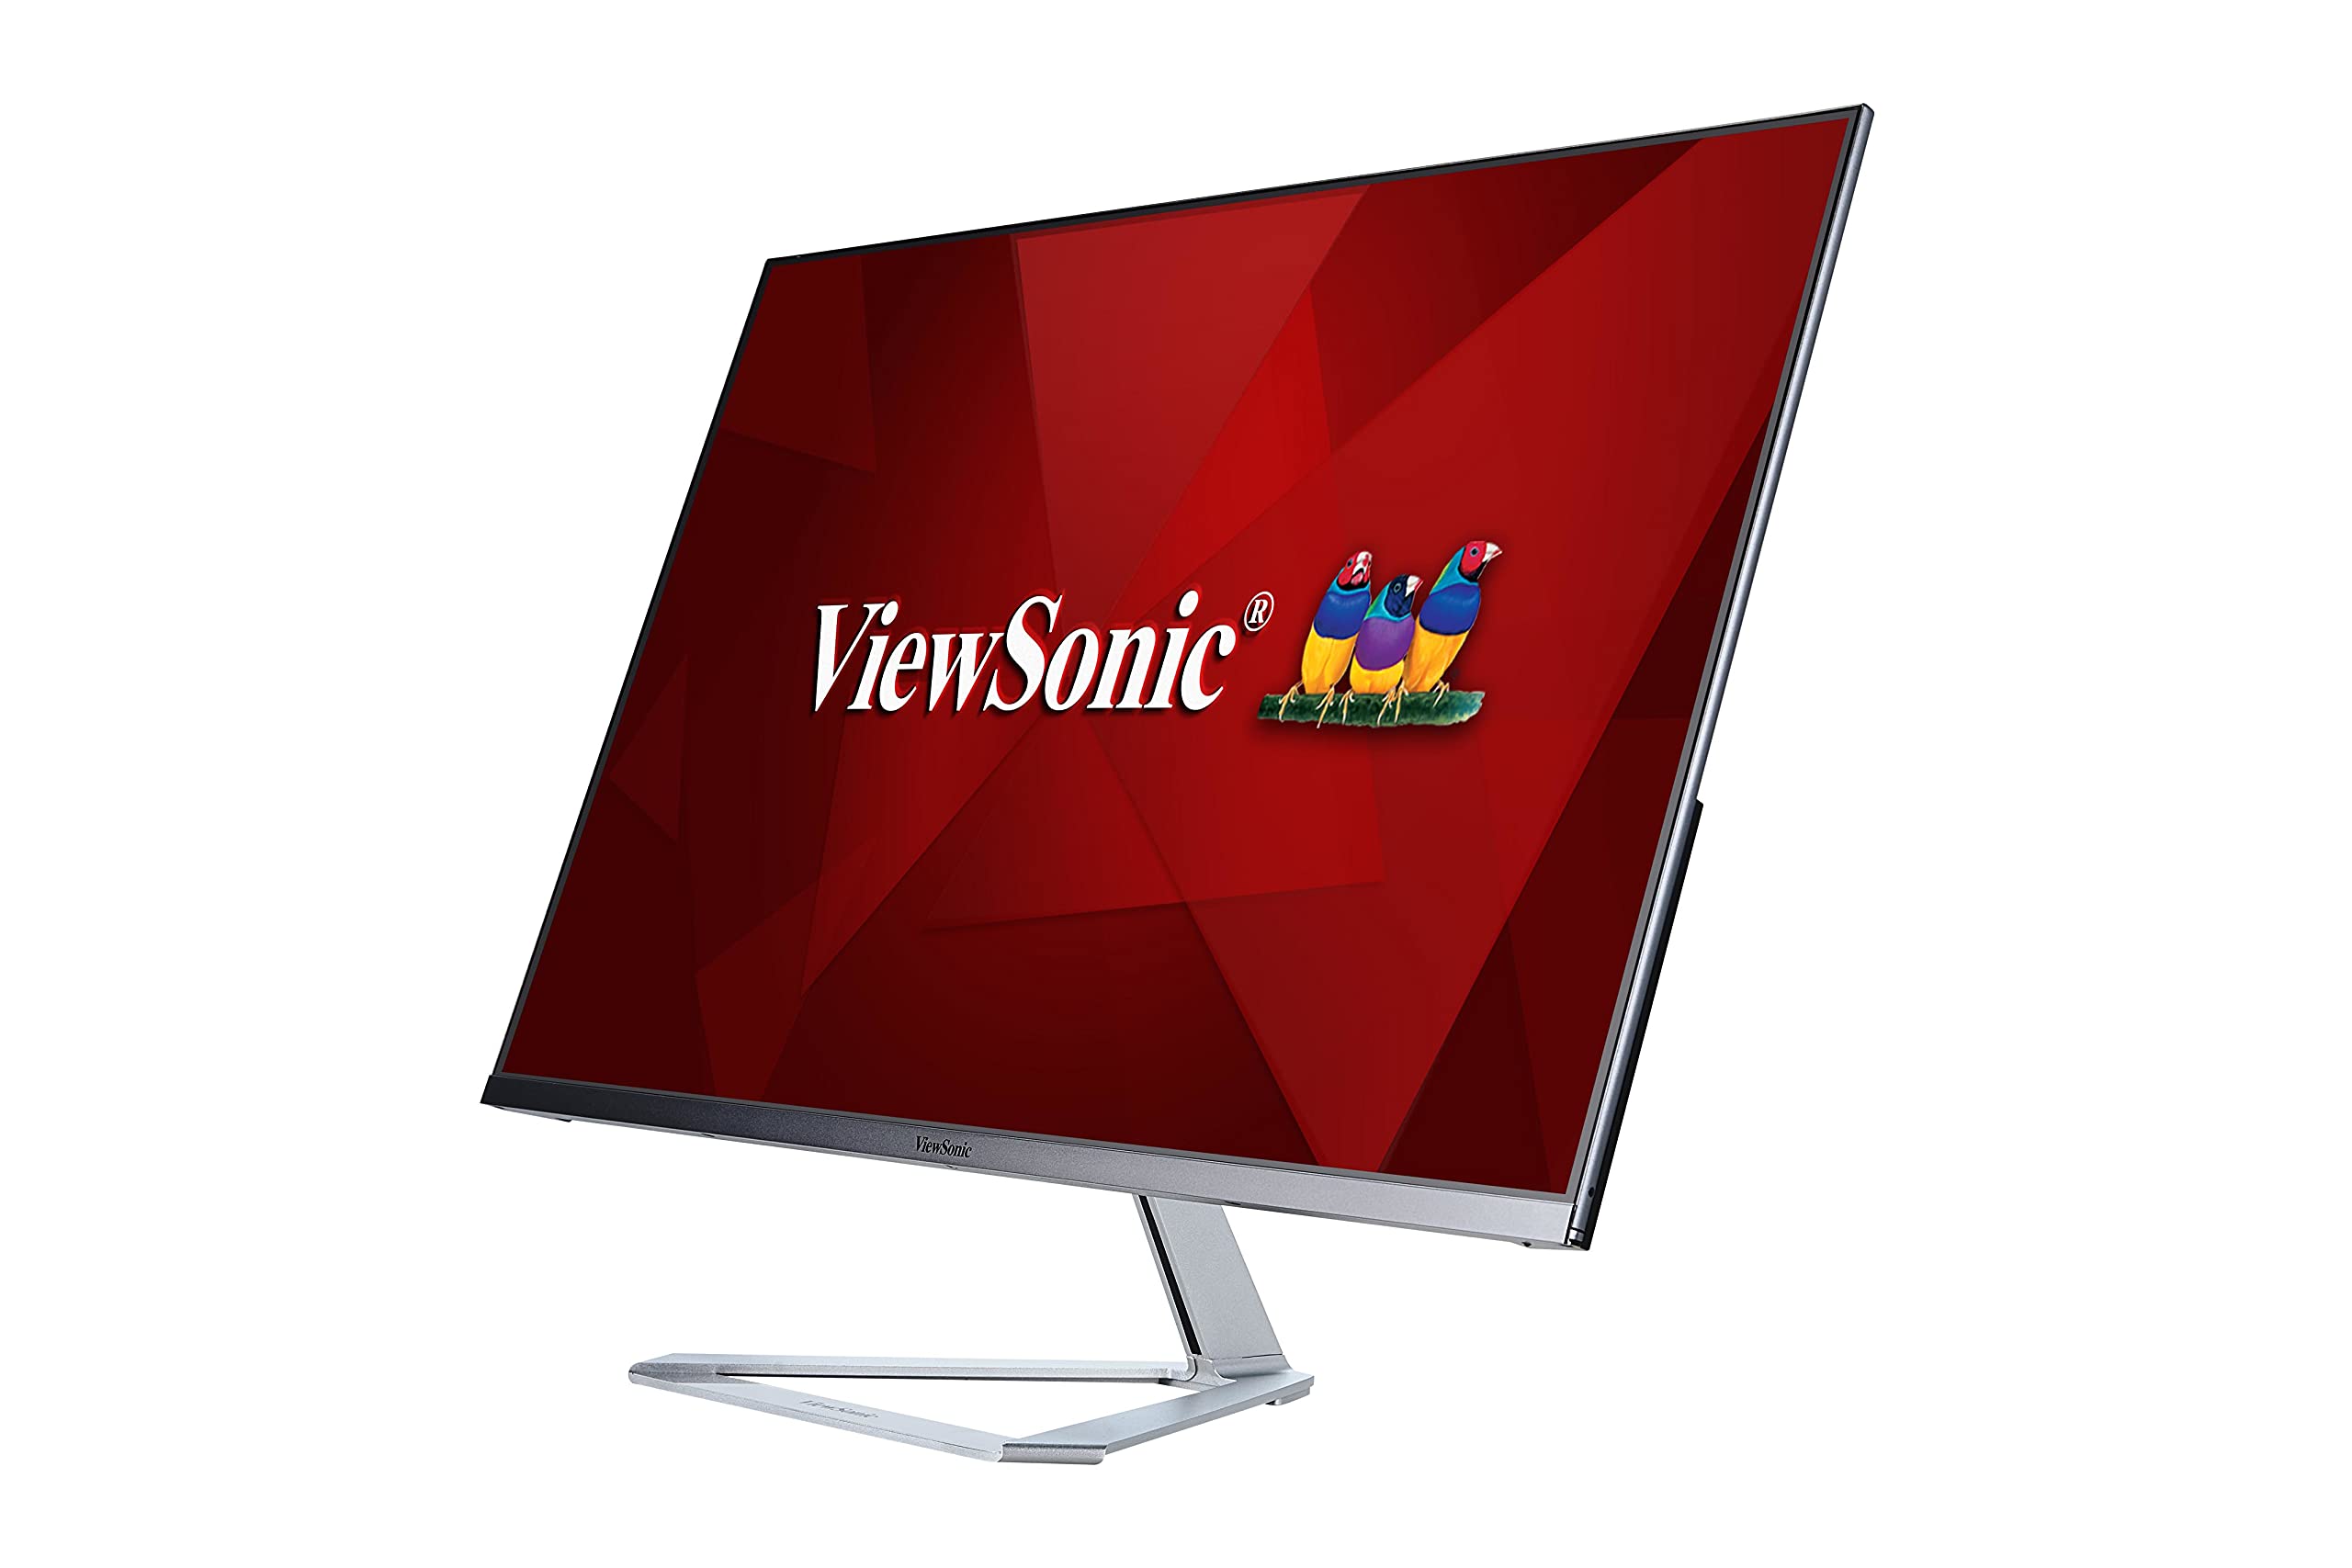 ViewSonic VX3276-2K-MHD 32 Inch Widescreen IPS 1440p Monitor with Ultra-Thin Bezels, HDMI DisplayPort and Mini DisplayPort